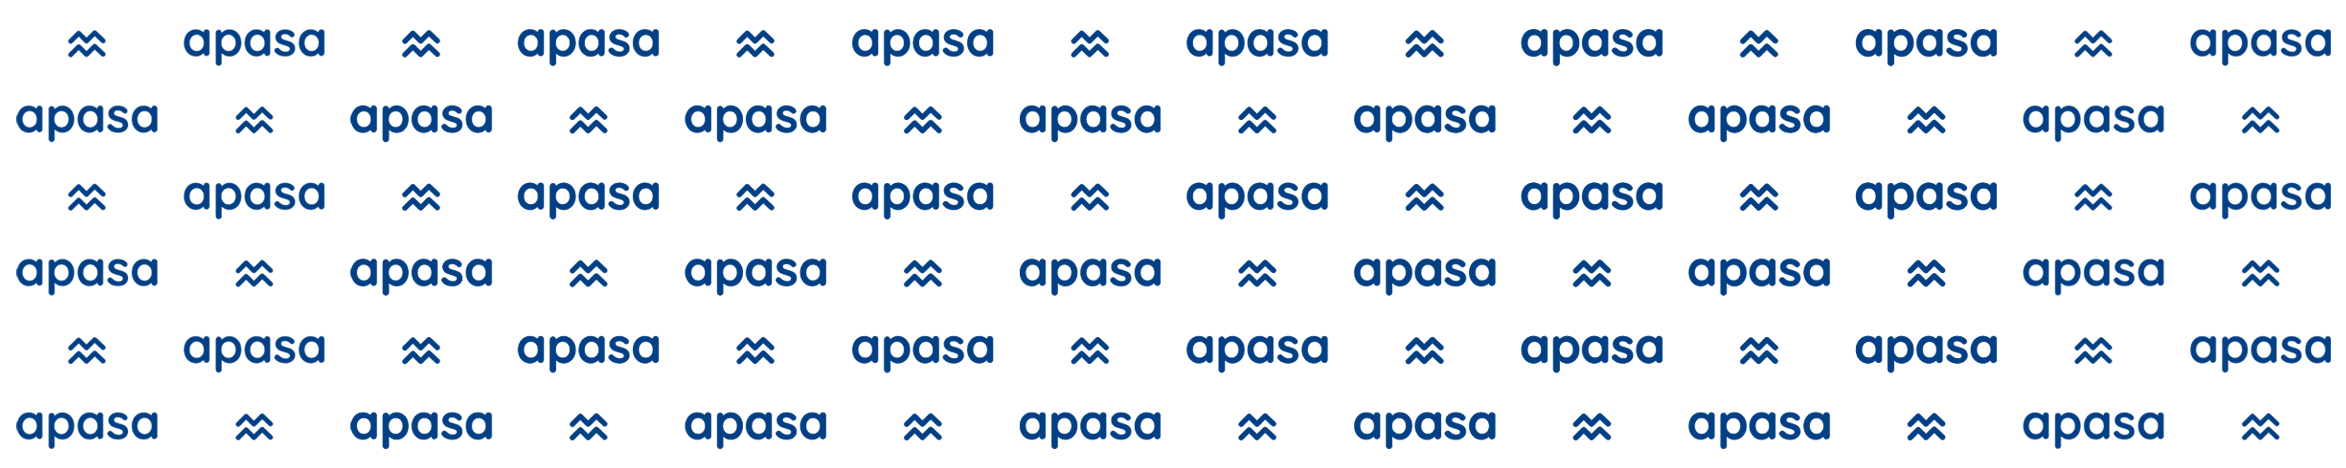 Repetición de logotipo Apasa